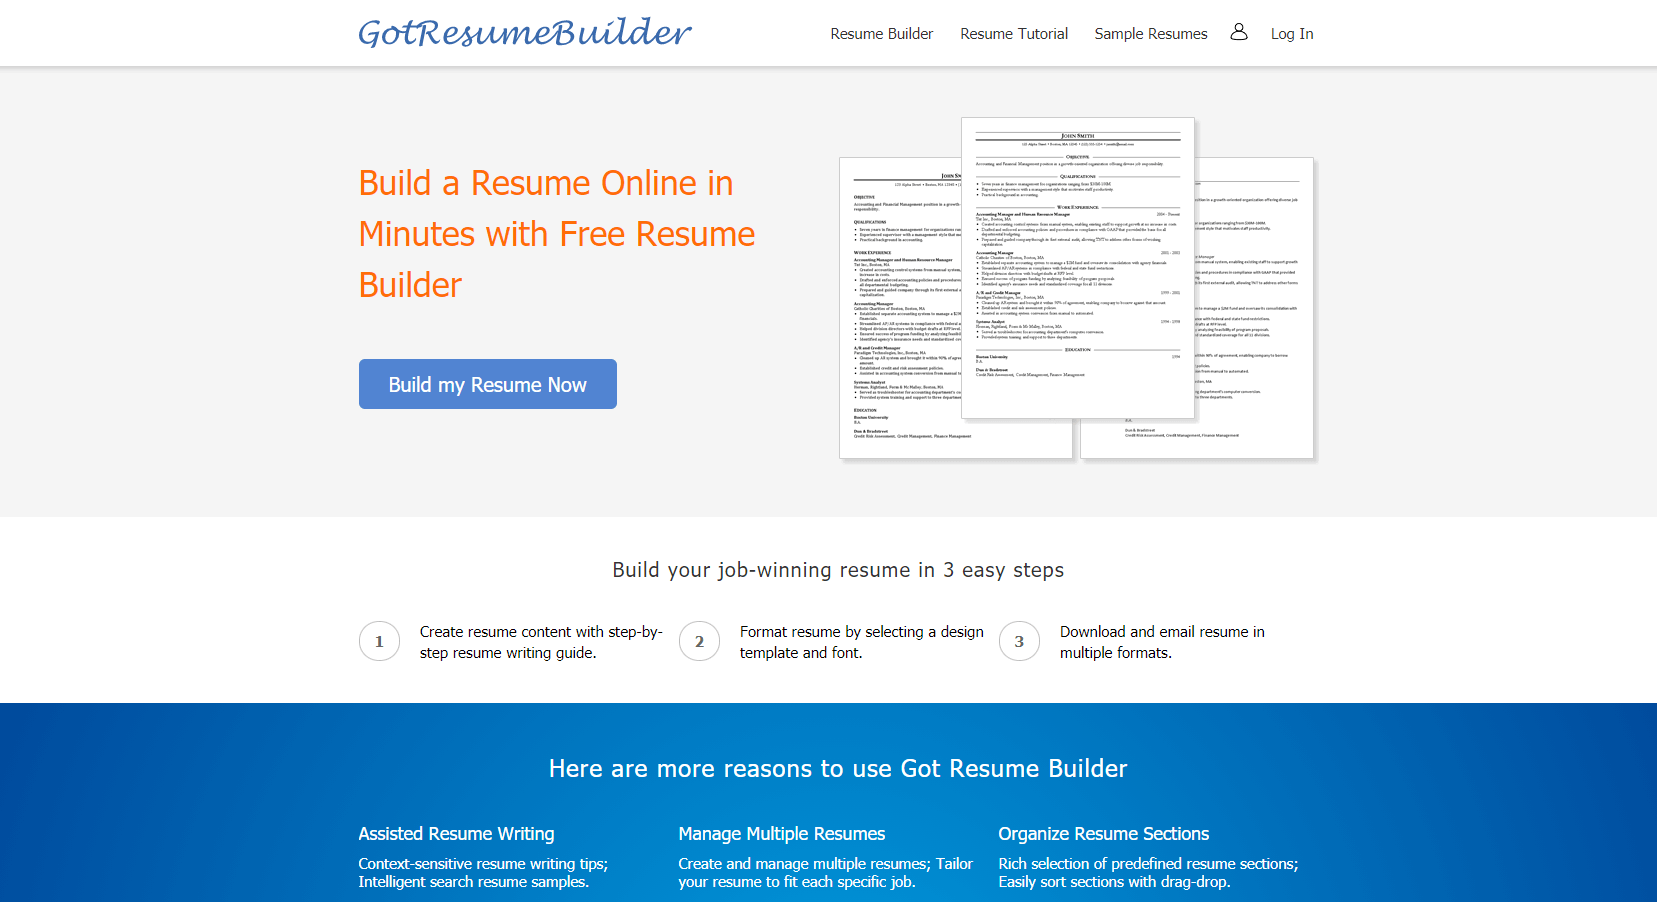 gotresumebuilder.com Review by TopResumeWritingServices